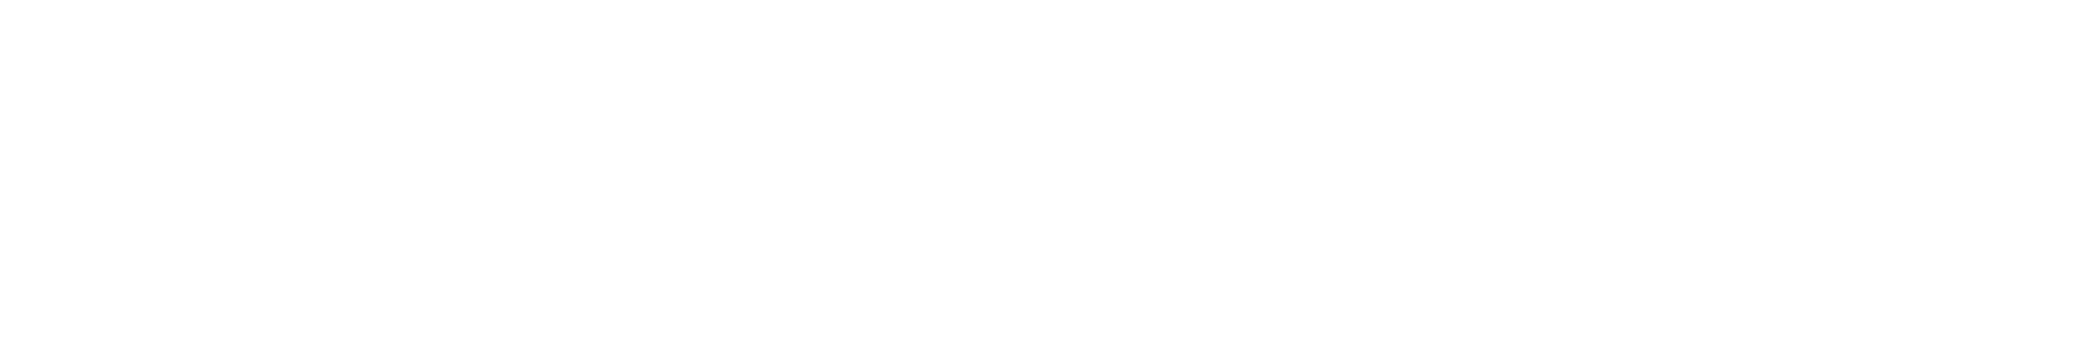 TreadLabs_logo_light@2x